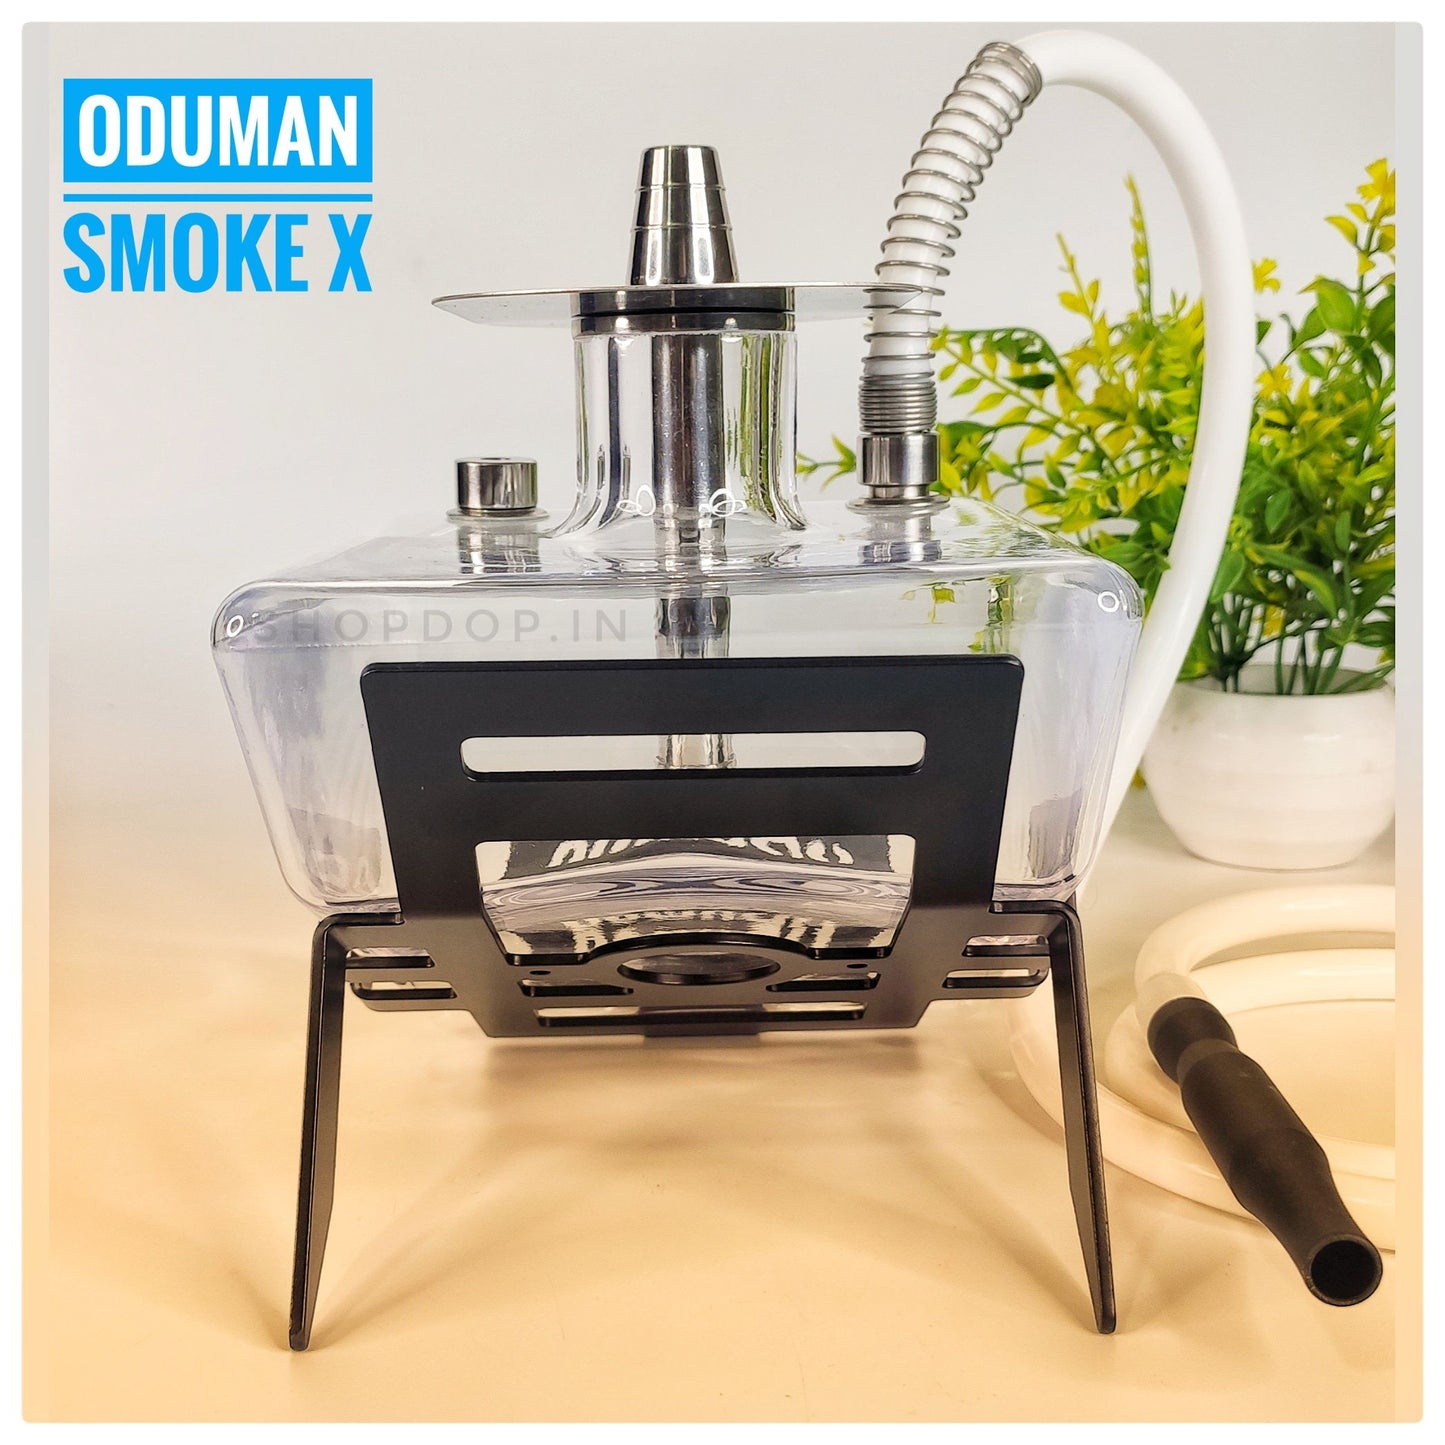 Oduman Smoke X Hookah with LED Light